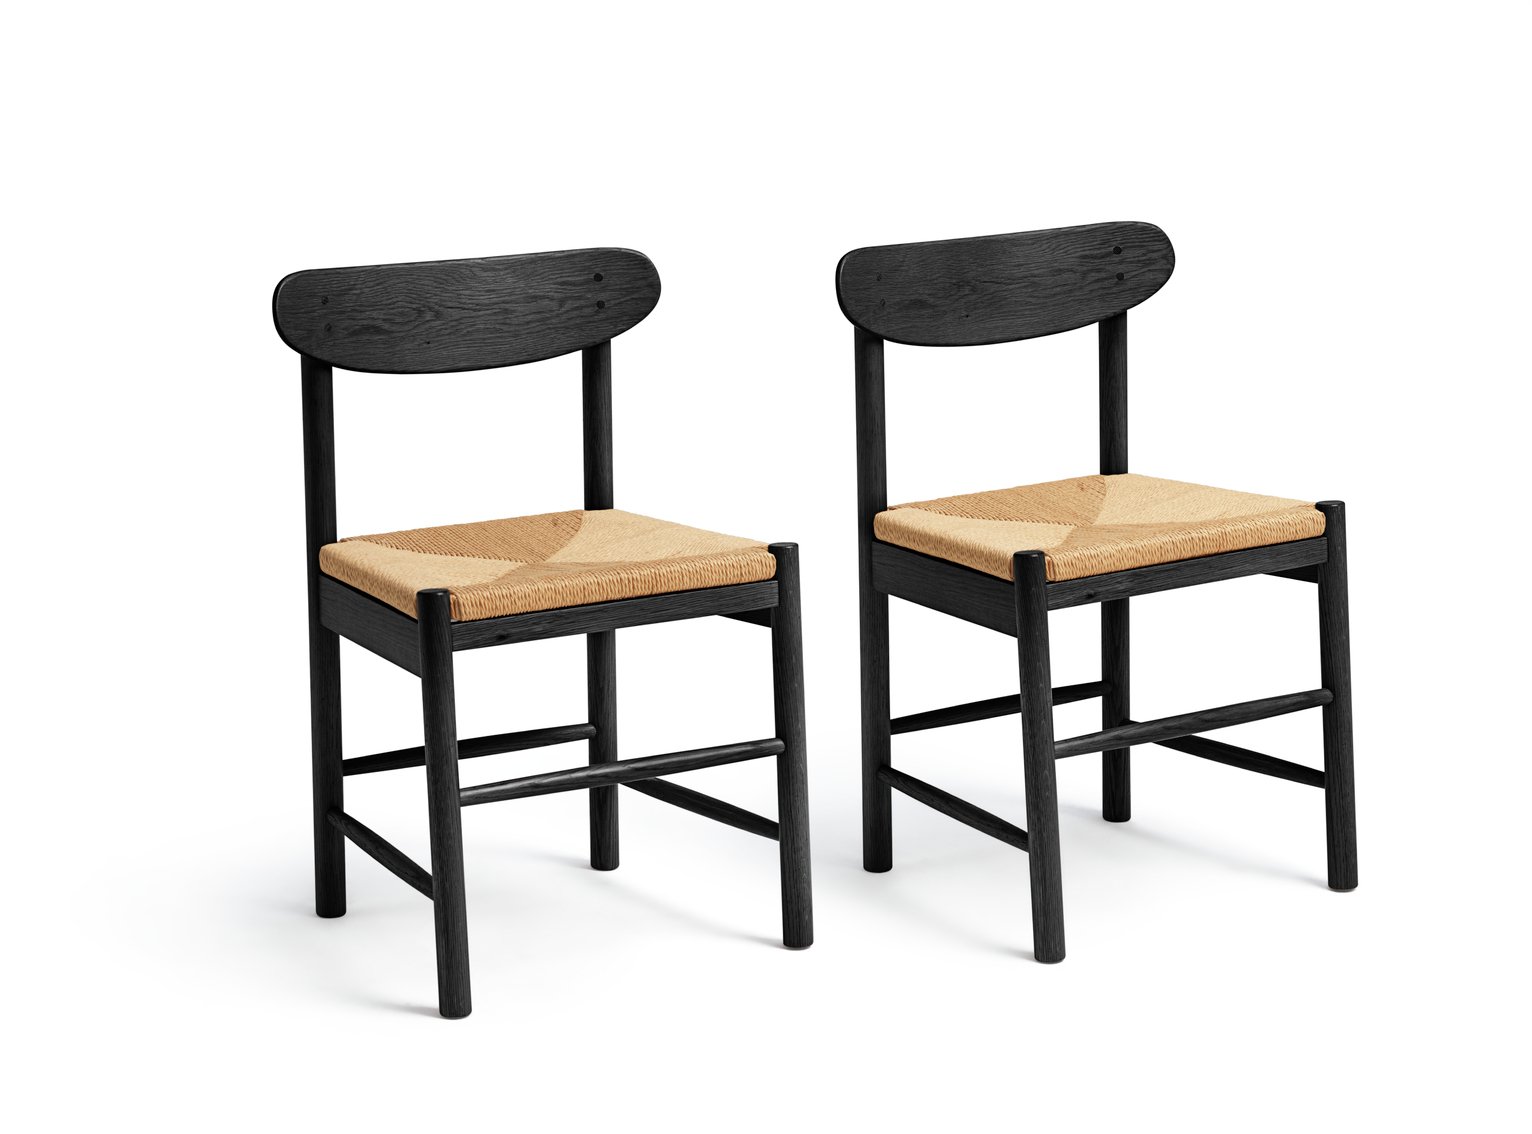 Habitat Hanna Pair of Wood Dining Chairs - Black